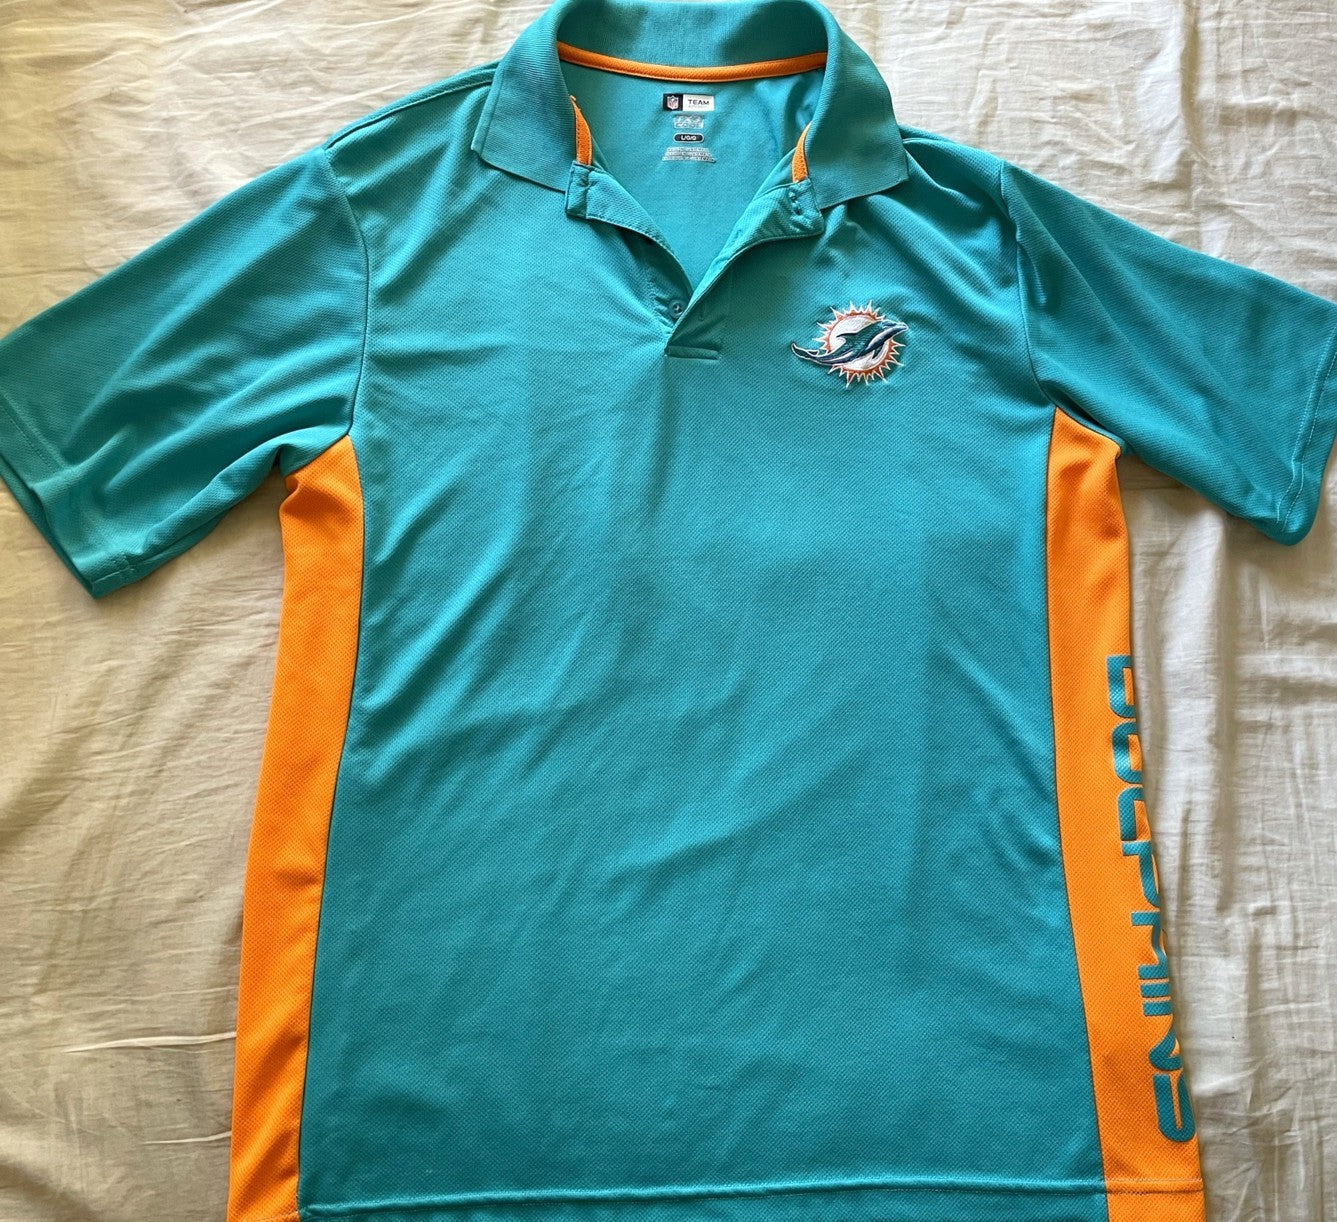 Miami Dolphins NFL Team Apparel TX3 Cool aqua golf or polo shirt LIKE NEW